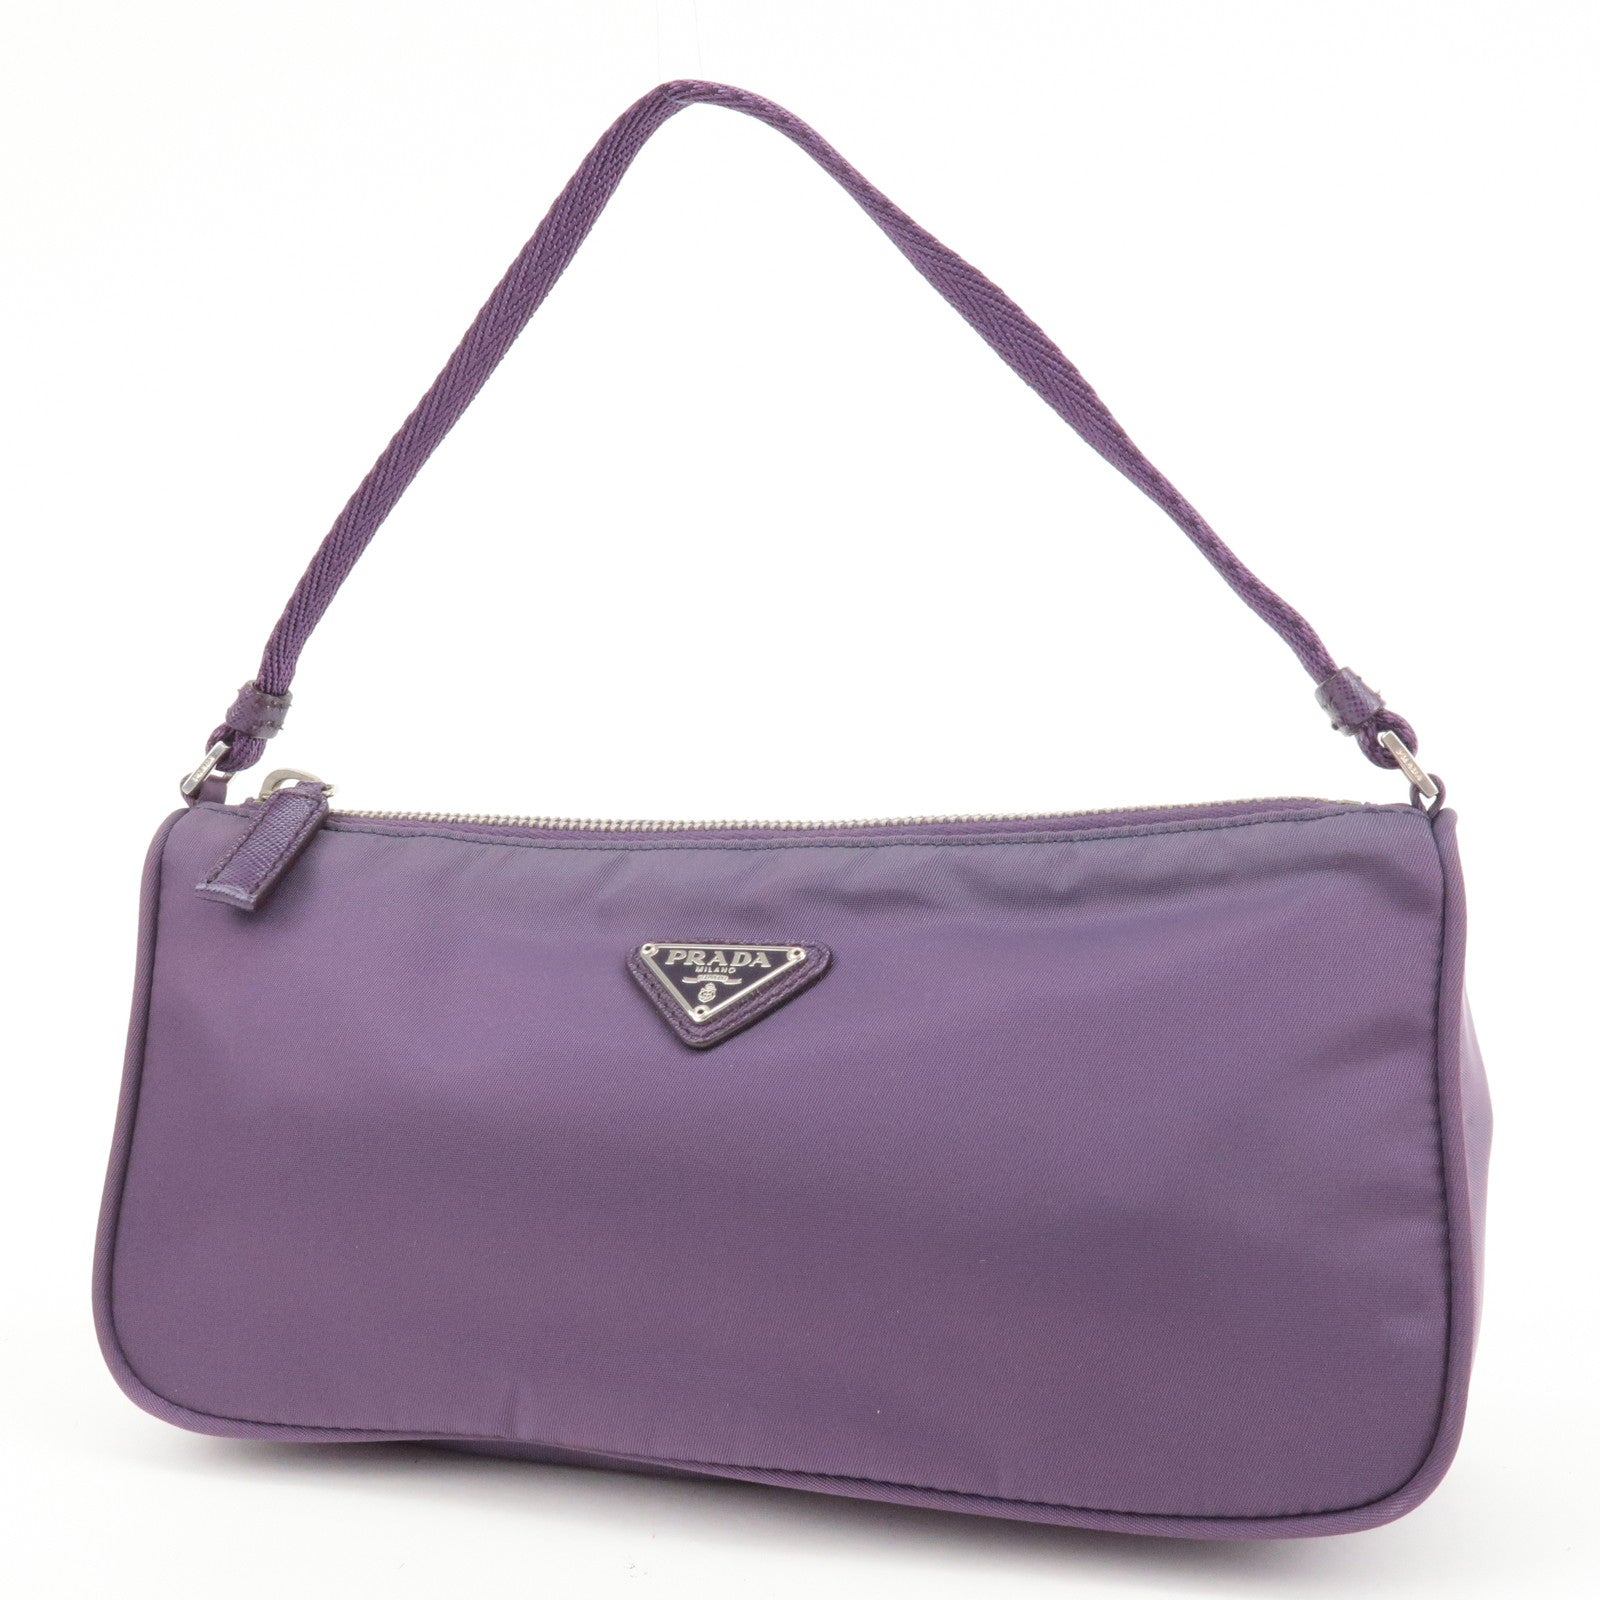 YFMHA Women Square Box Shoulder Bag PU Pearl Chain Mini Drawstring Tote  (Purple) 